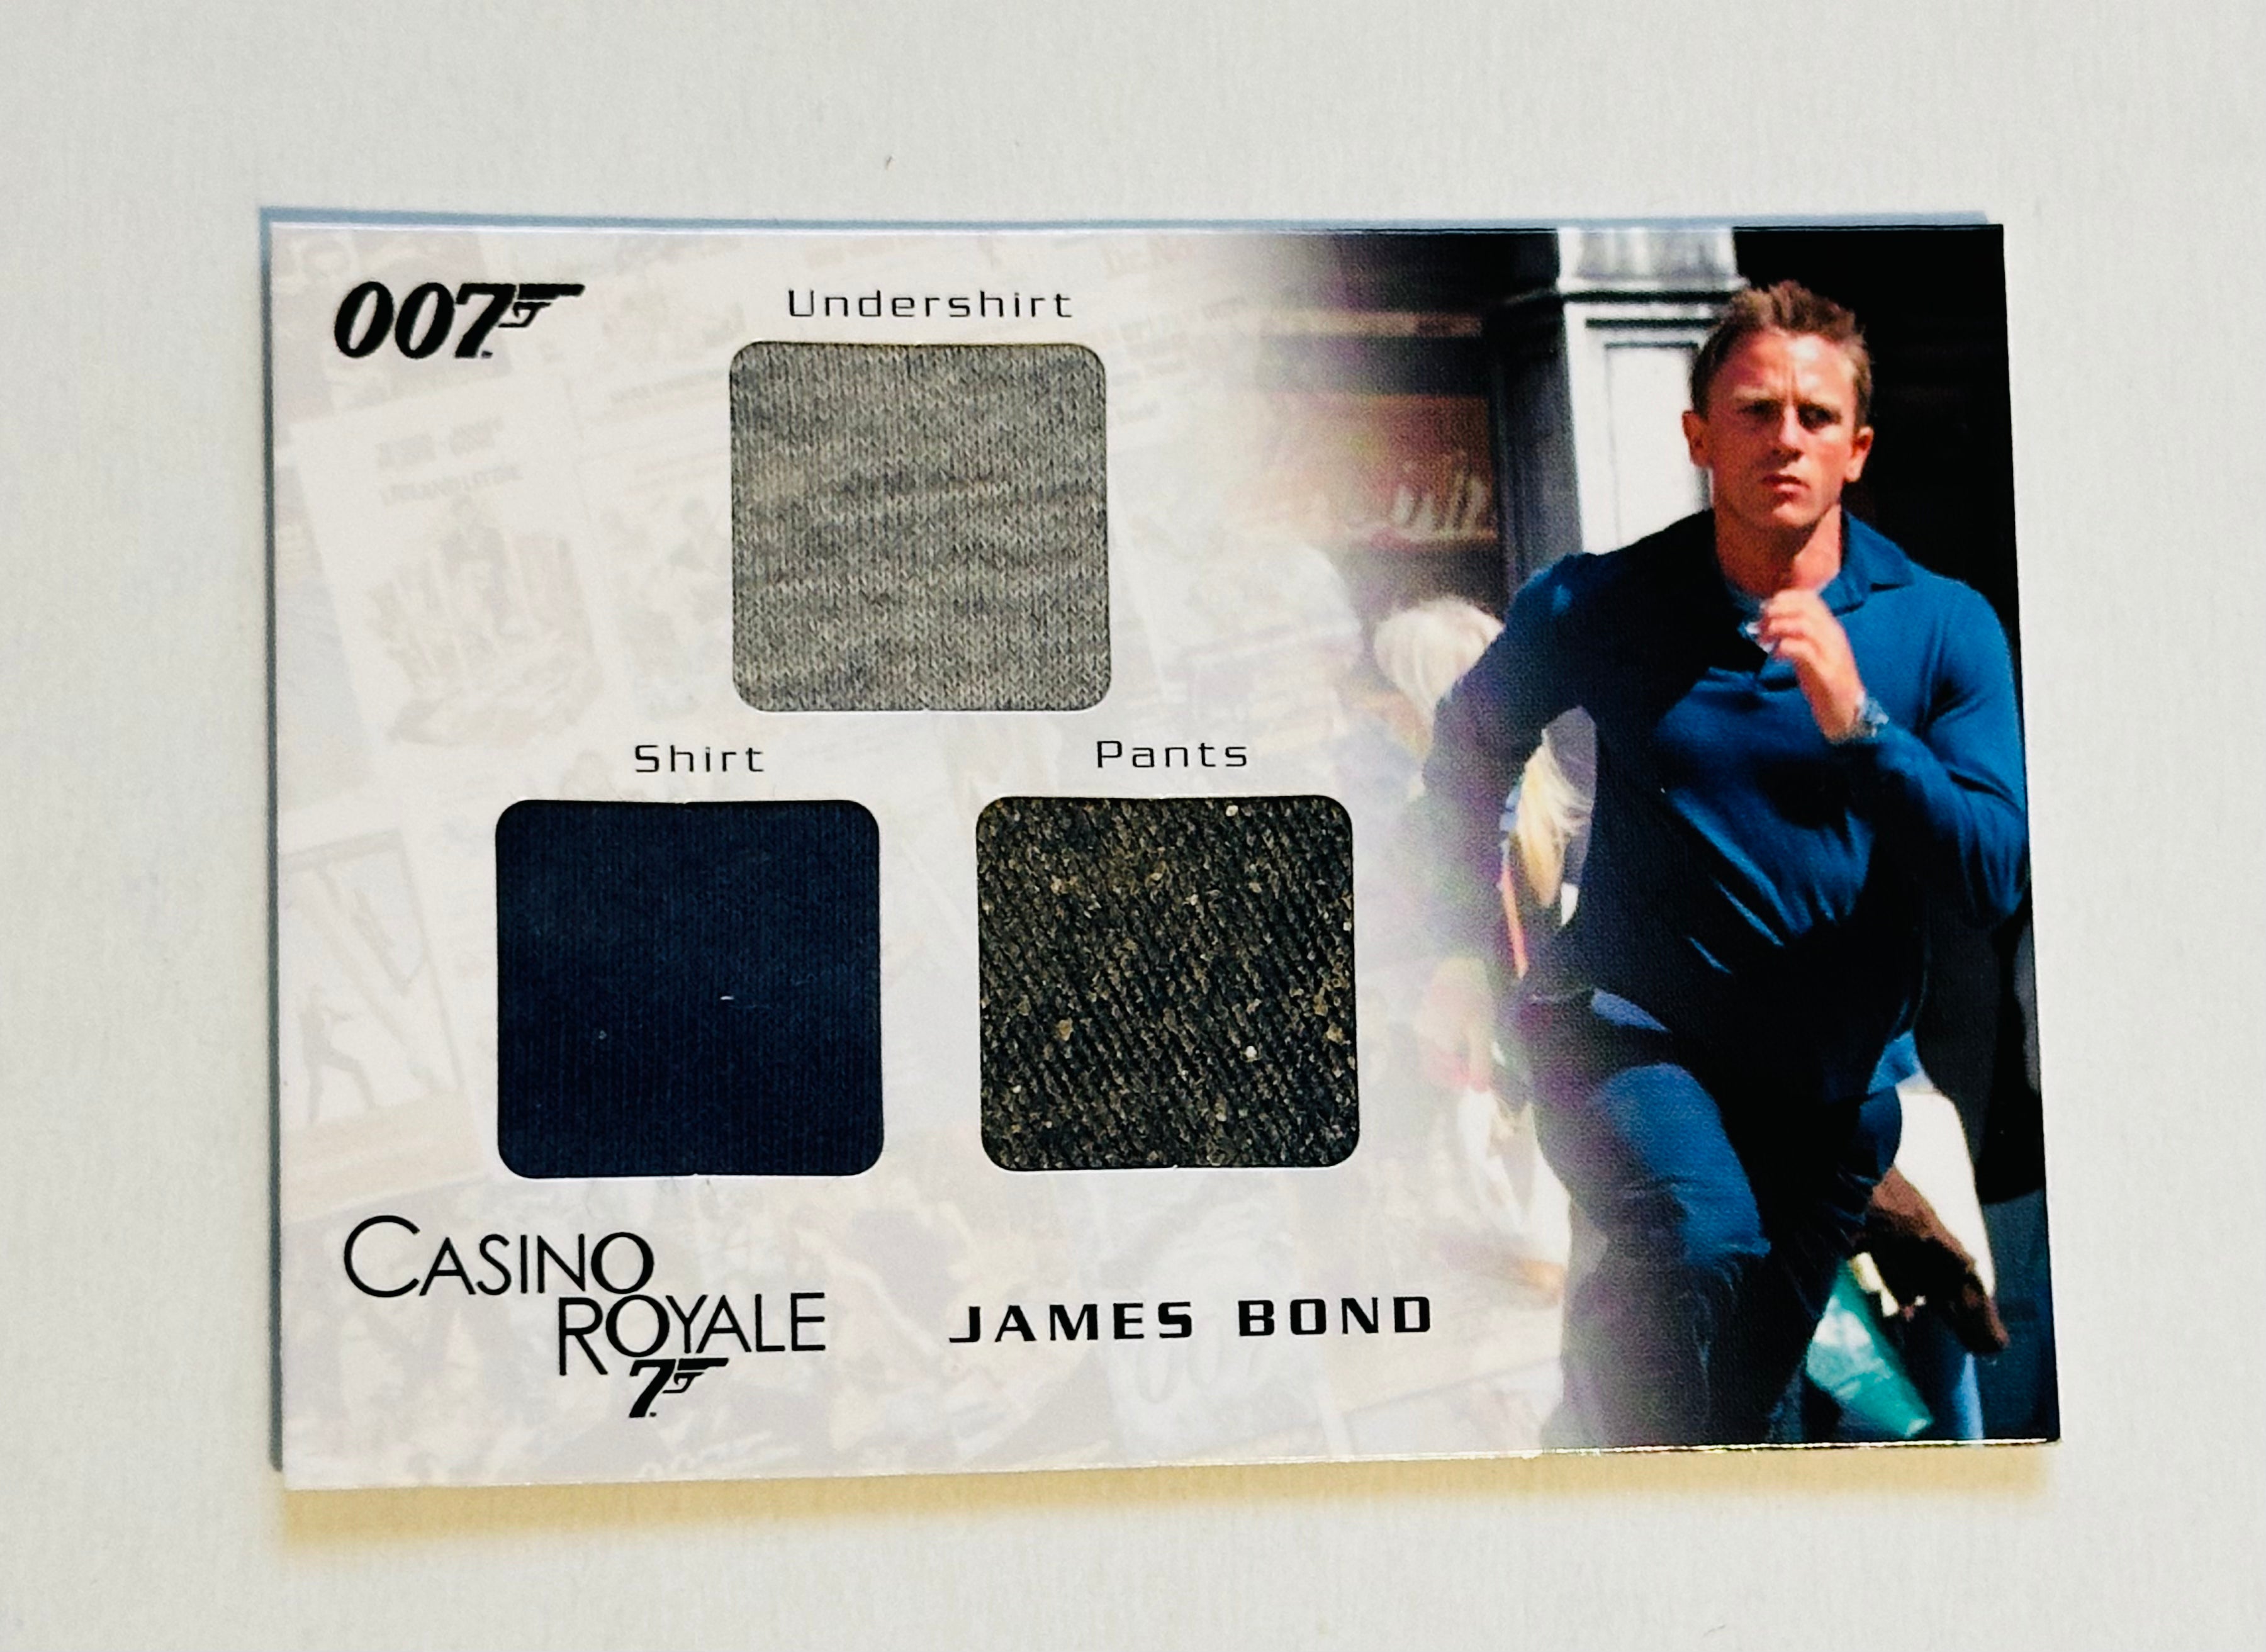 James Bond Daniel Craig rare triple memorabilia insert card